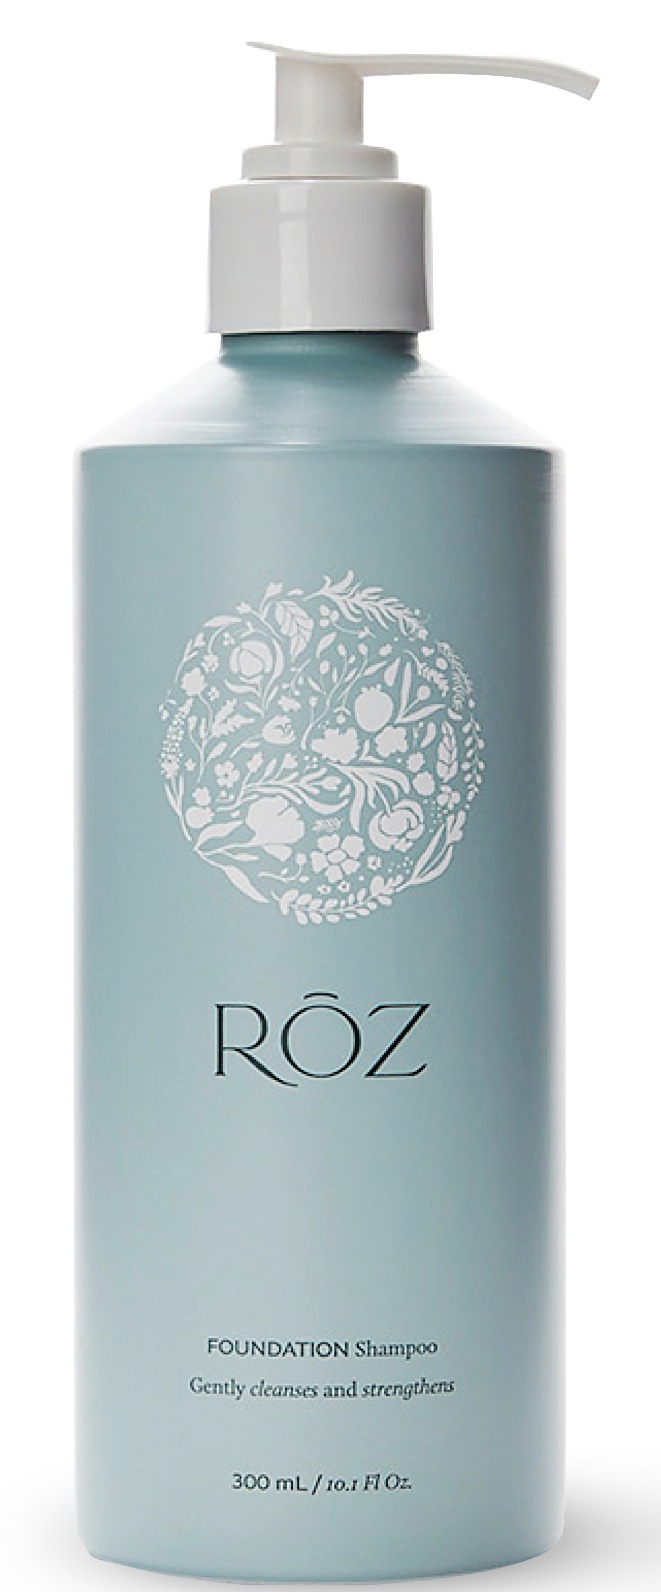 Roz Foundation Shampoo